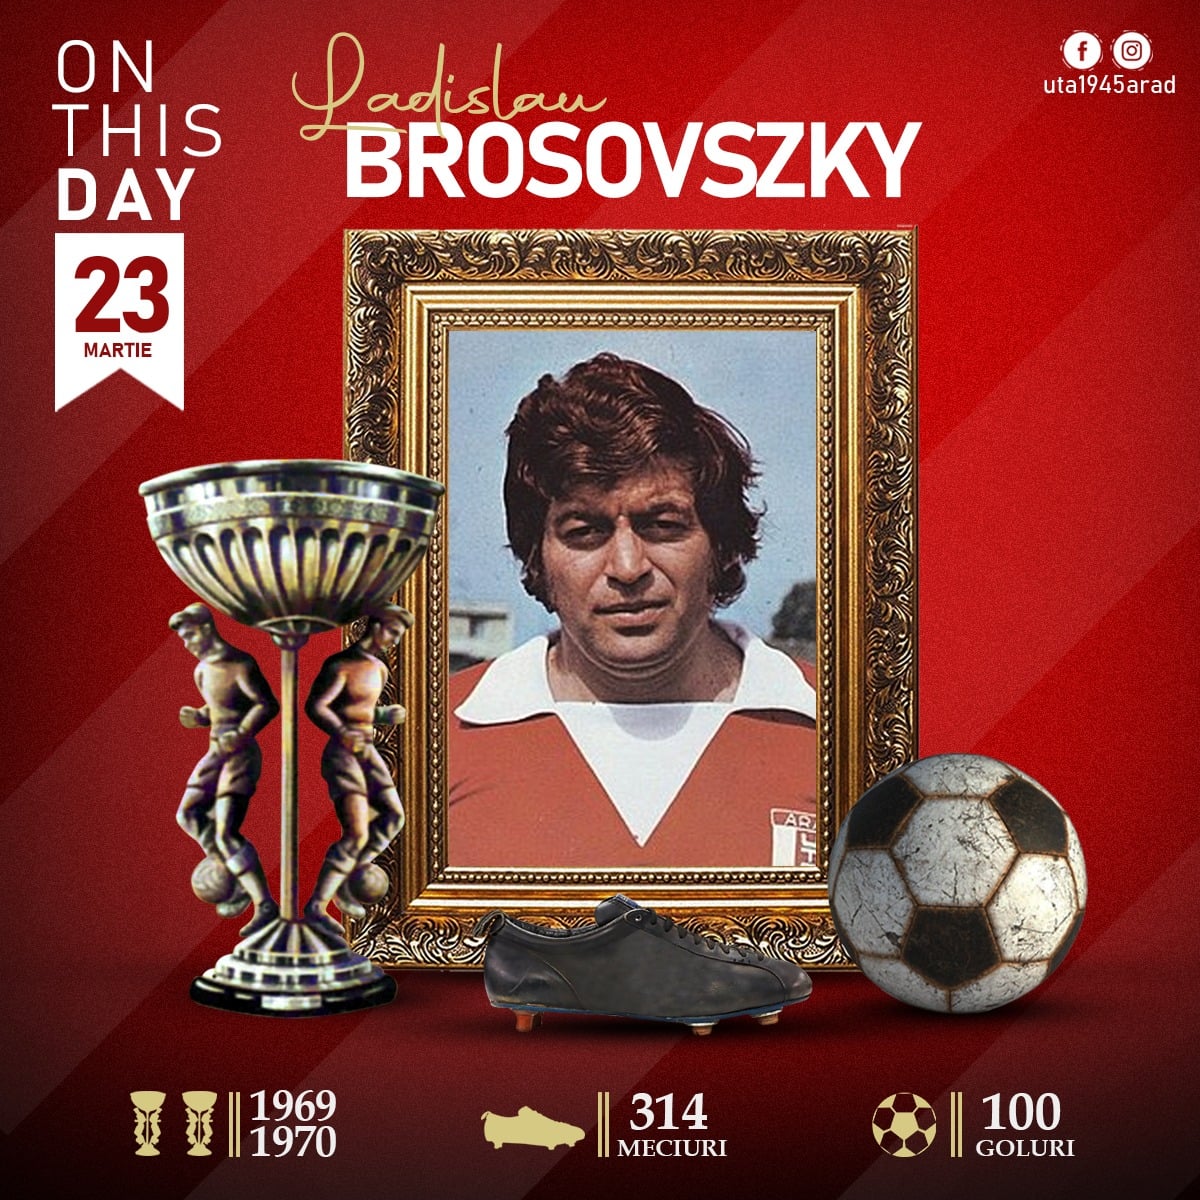  UTA îşi aminteşte astăzi de marele său fotbalist, Ladislau Brosovszky